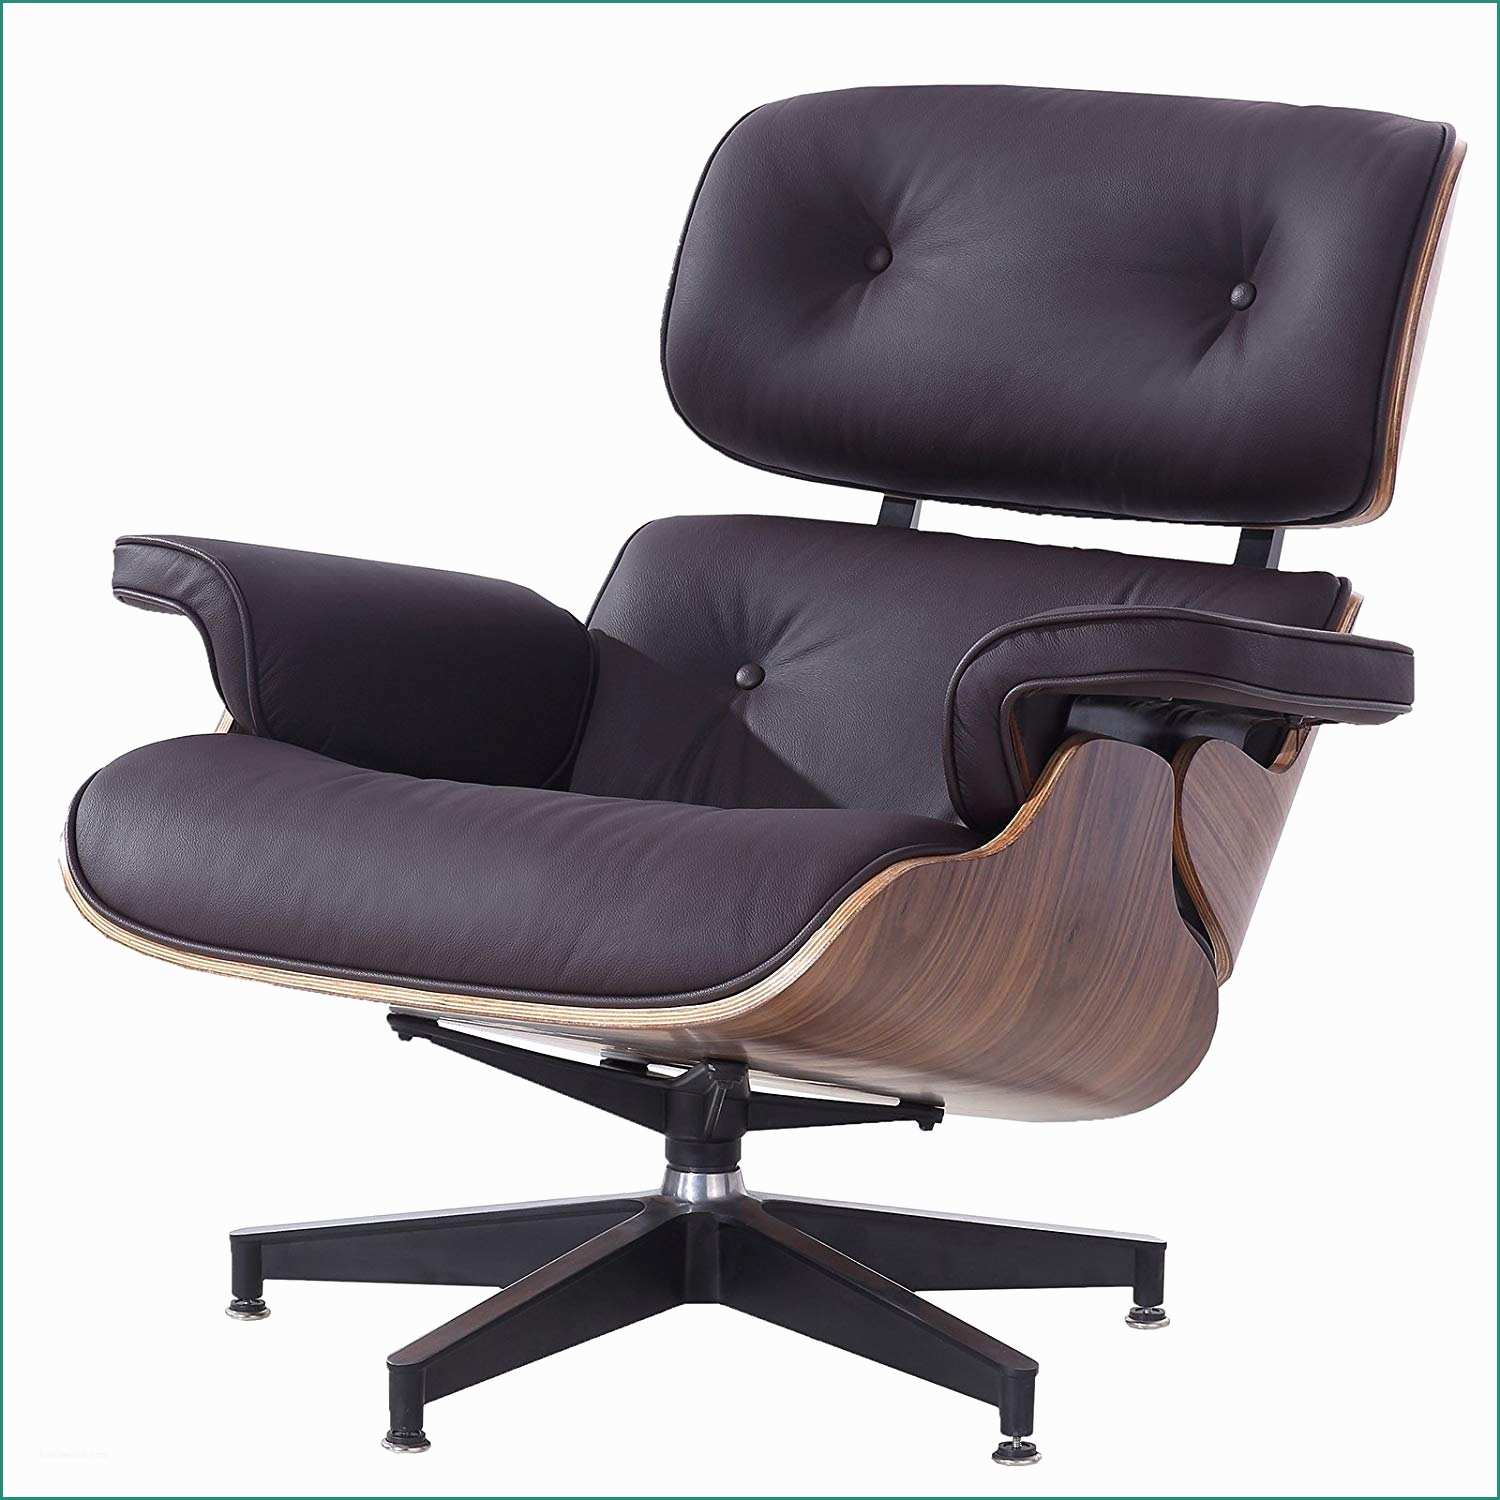 Eames Chair Dwg E Amazon Recliner Genius Grain Italian Leather Recliner